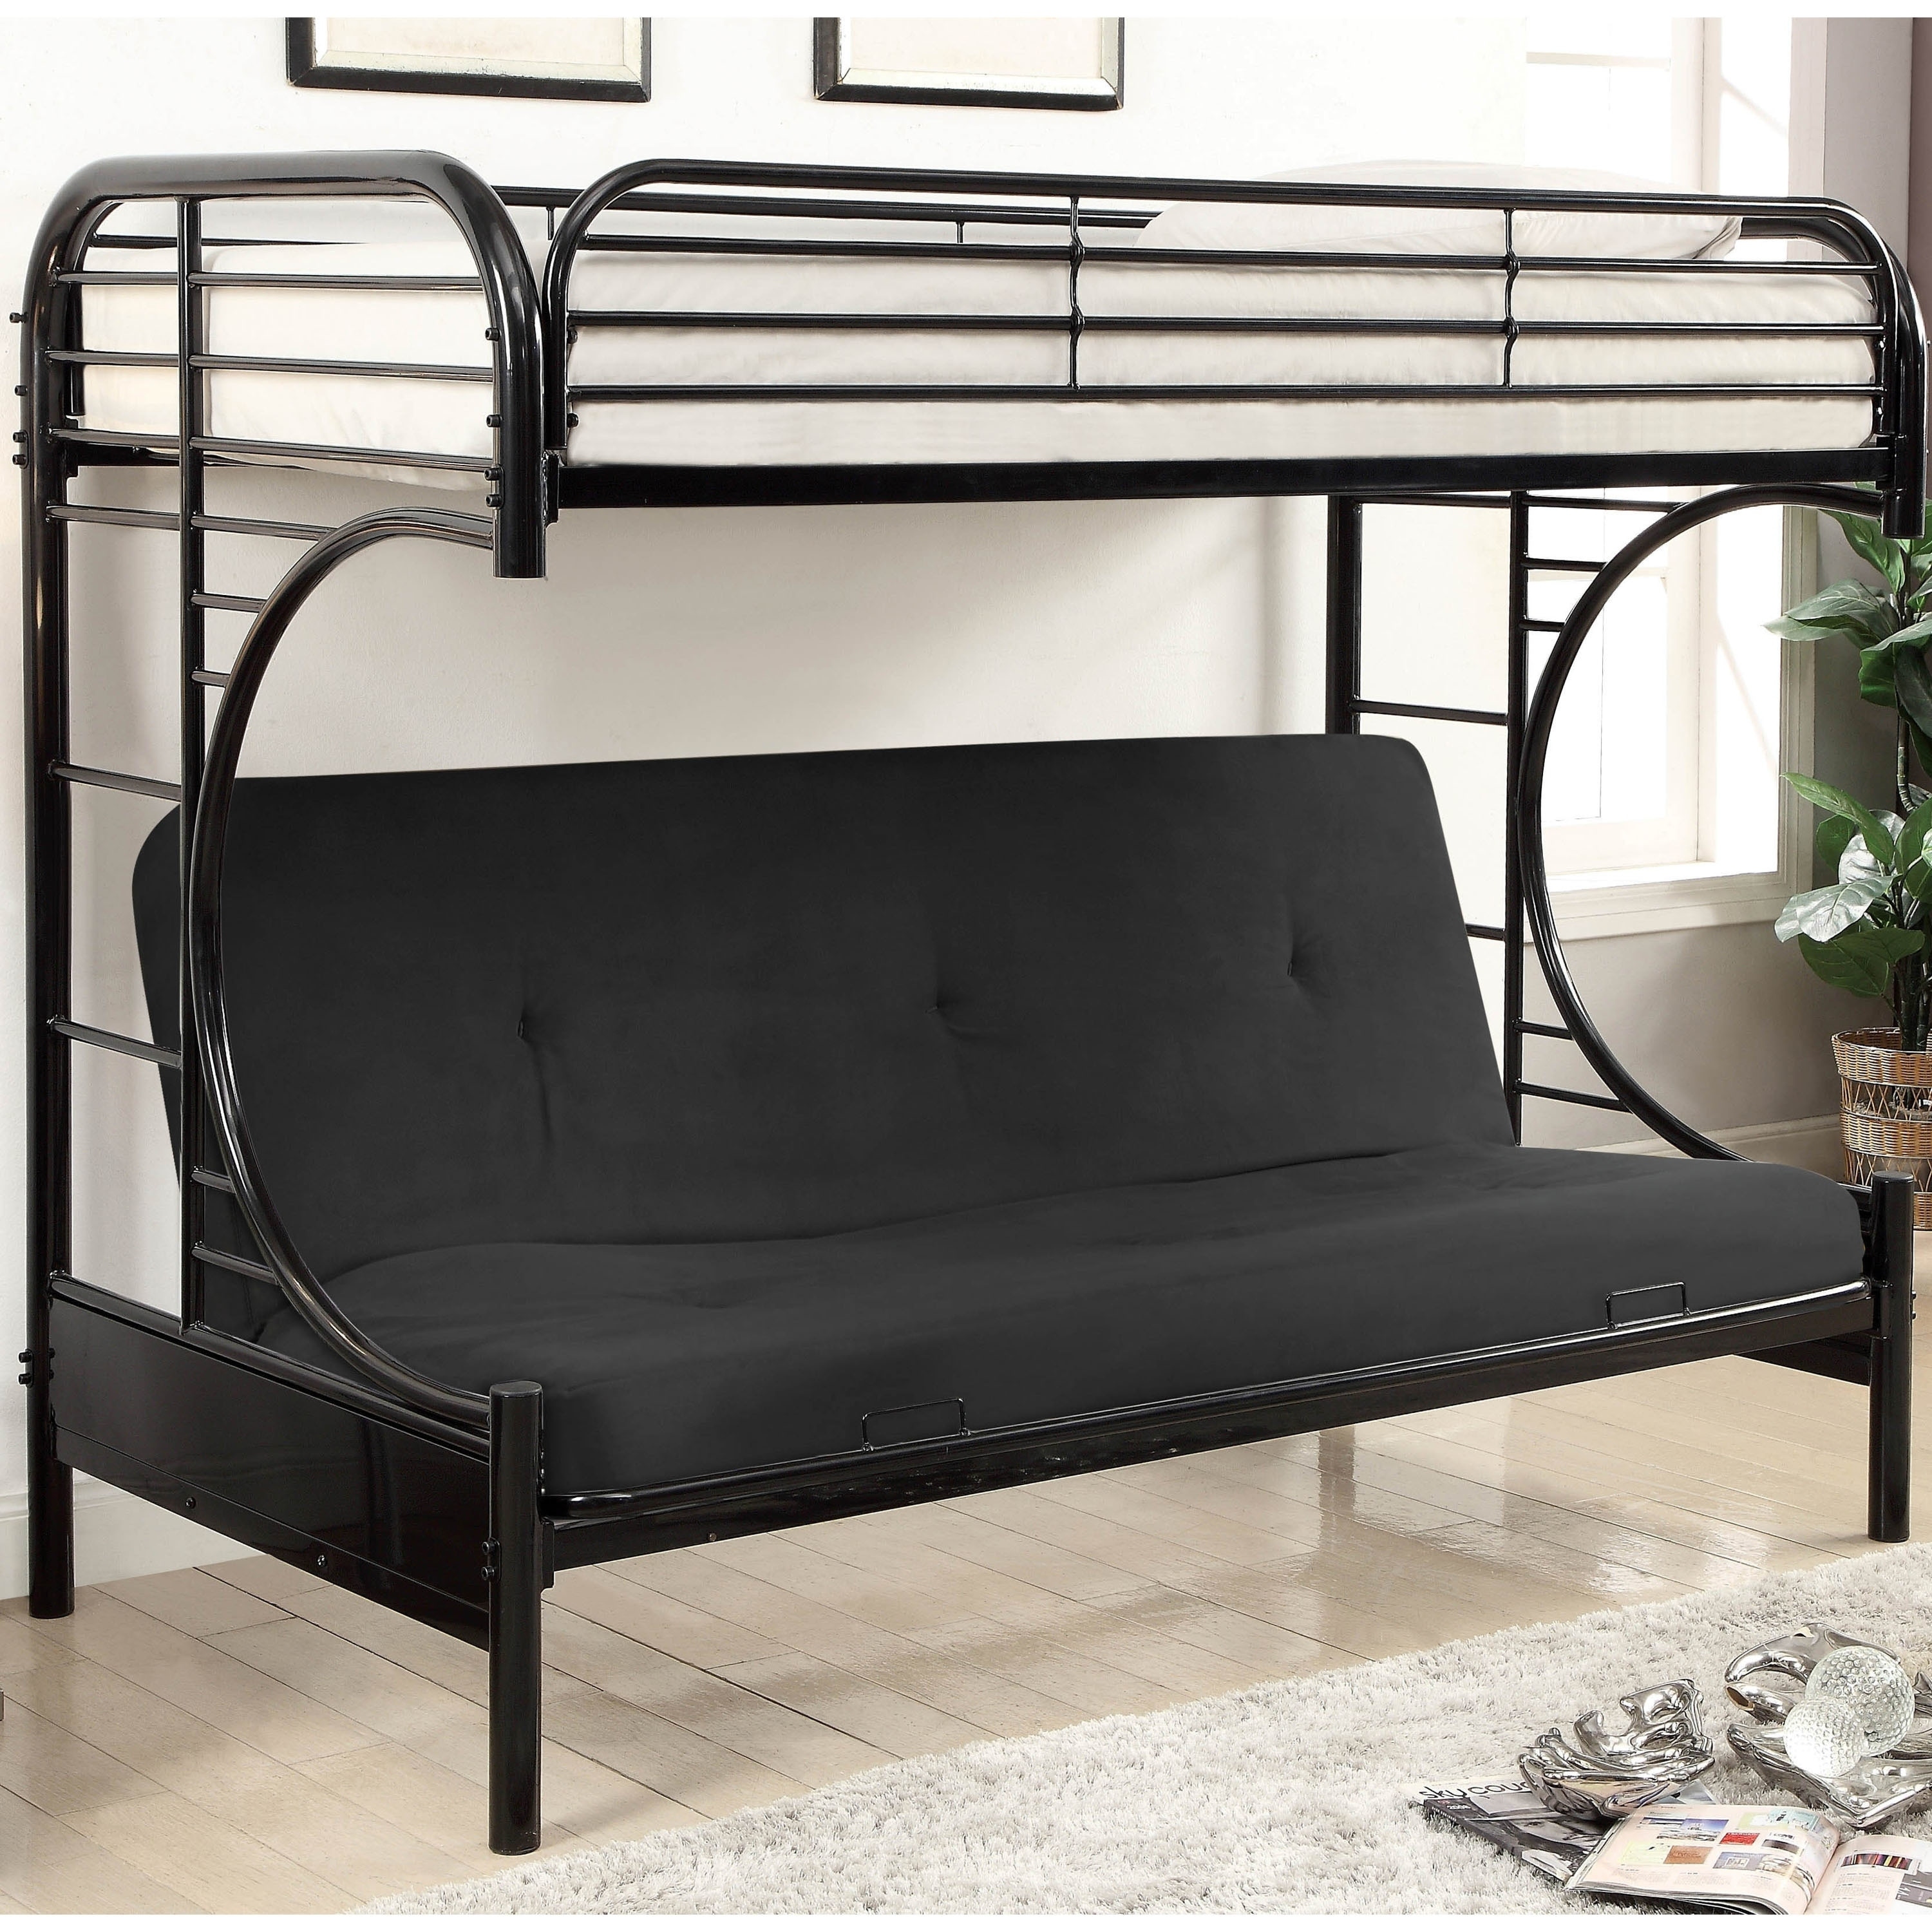 futon bunk bed set